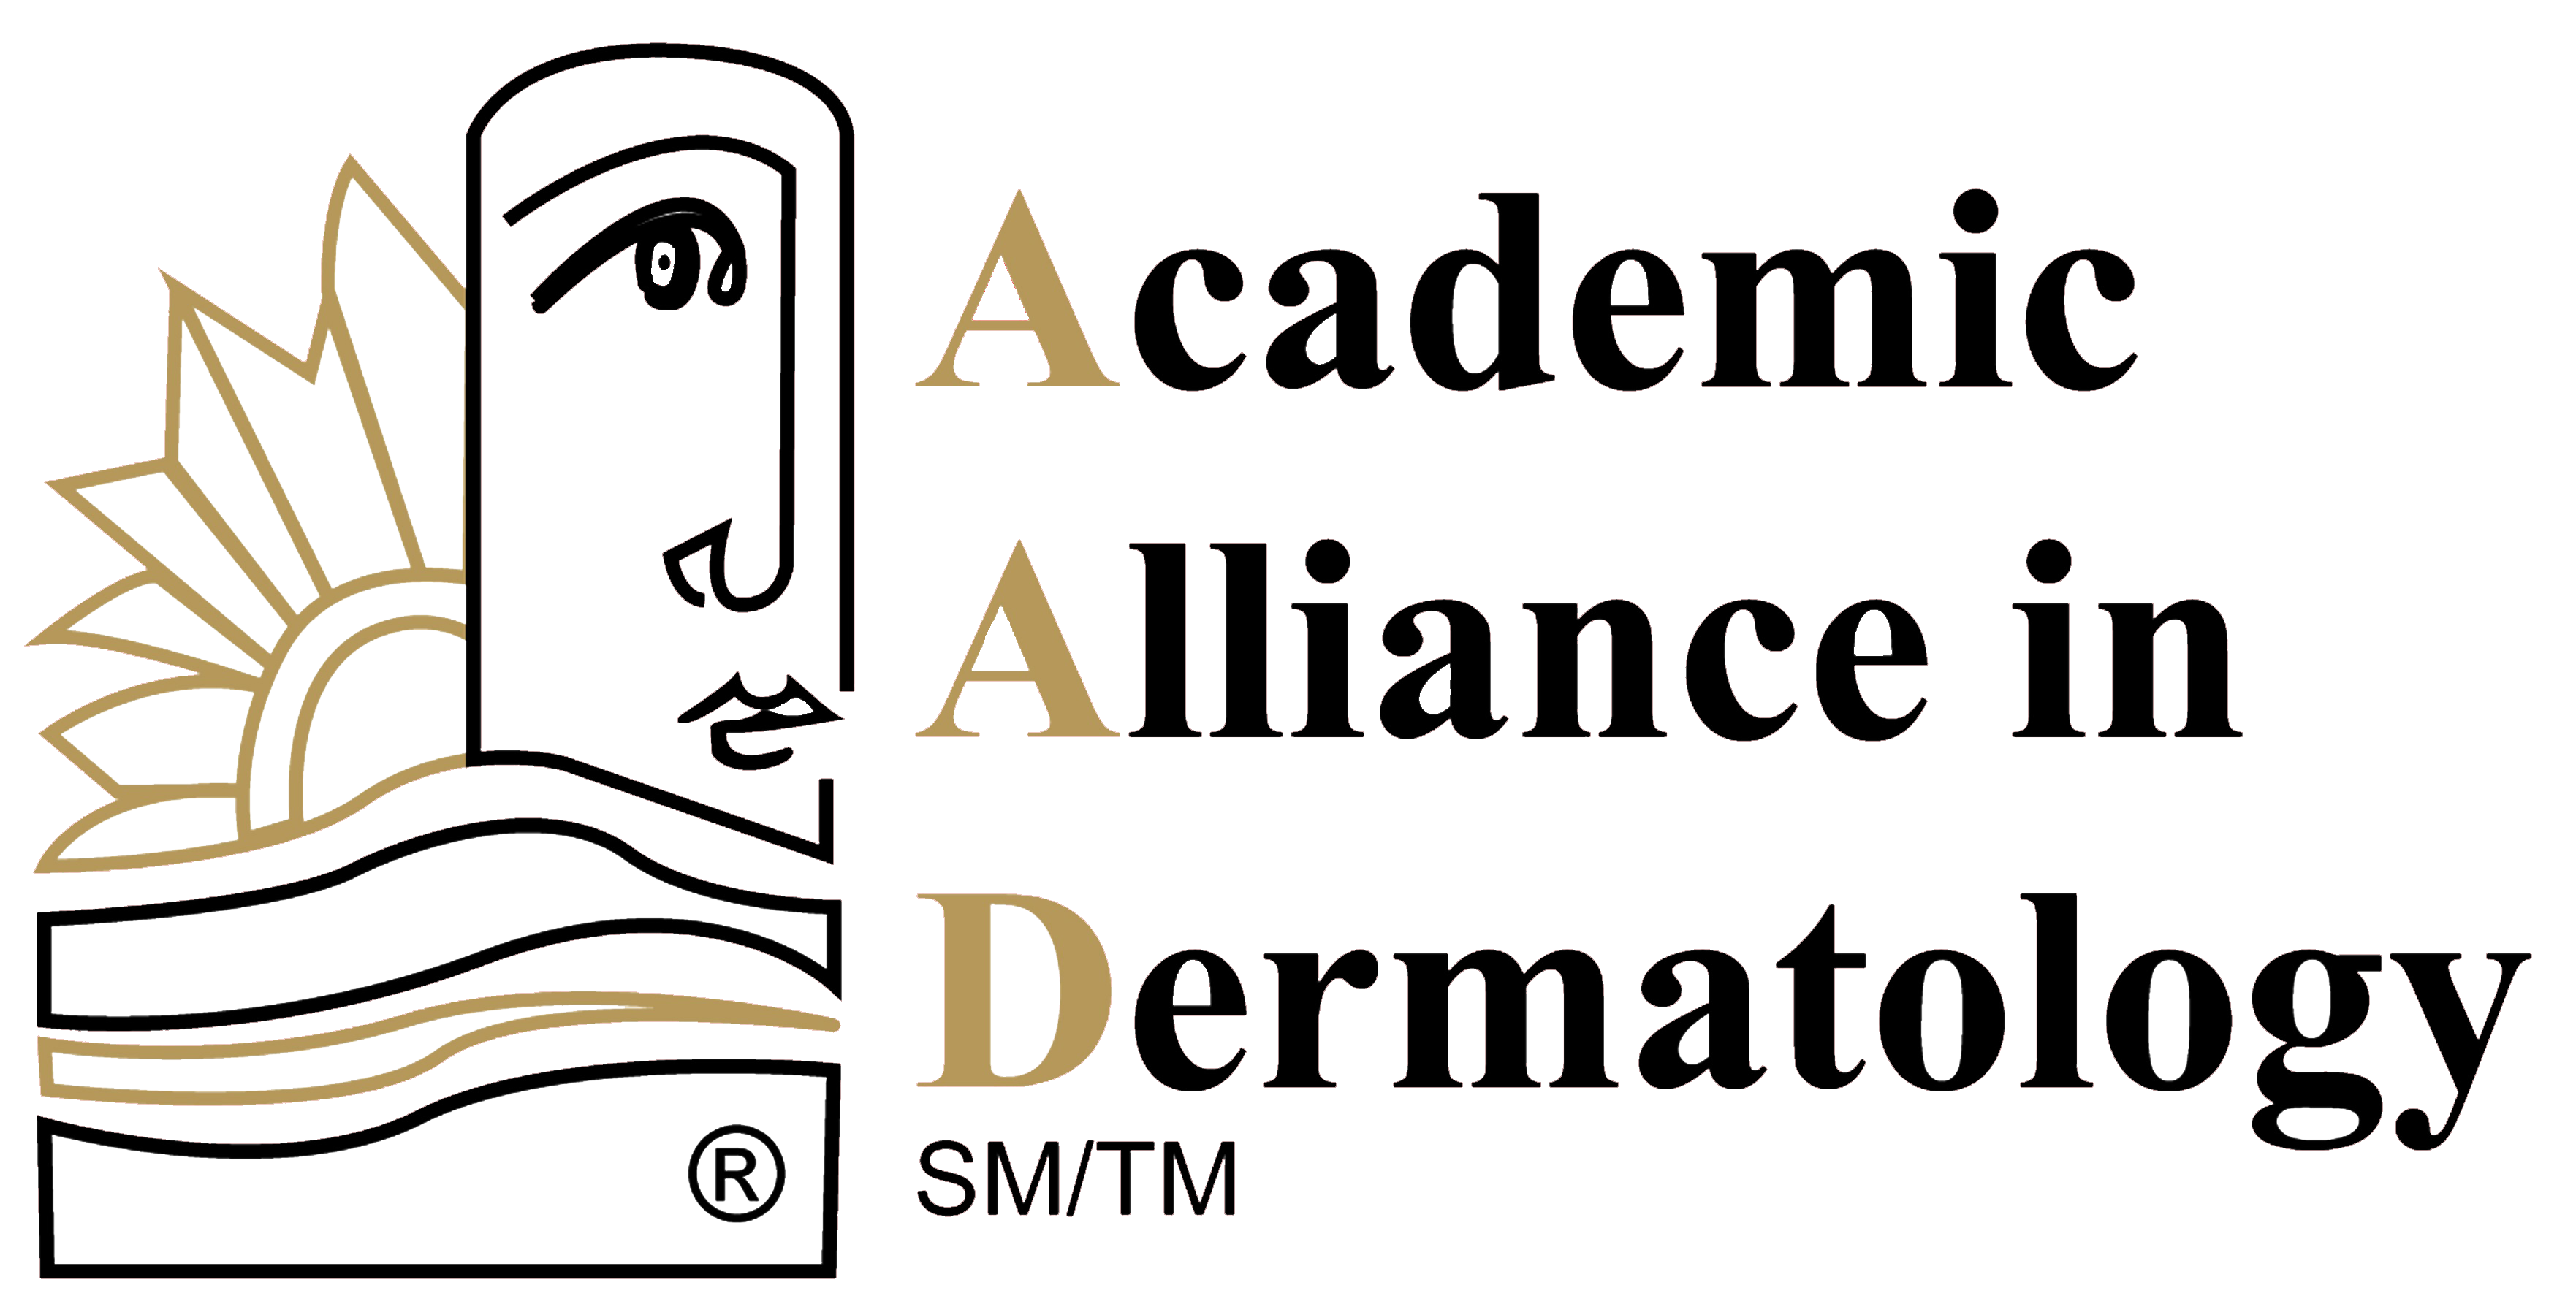 Academic Alliance in Dermatology logo